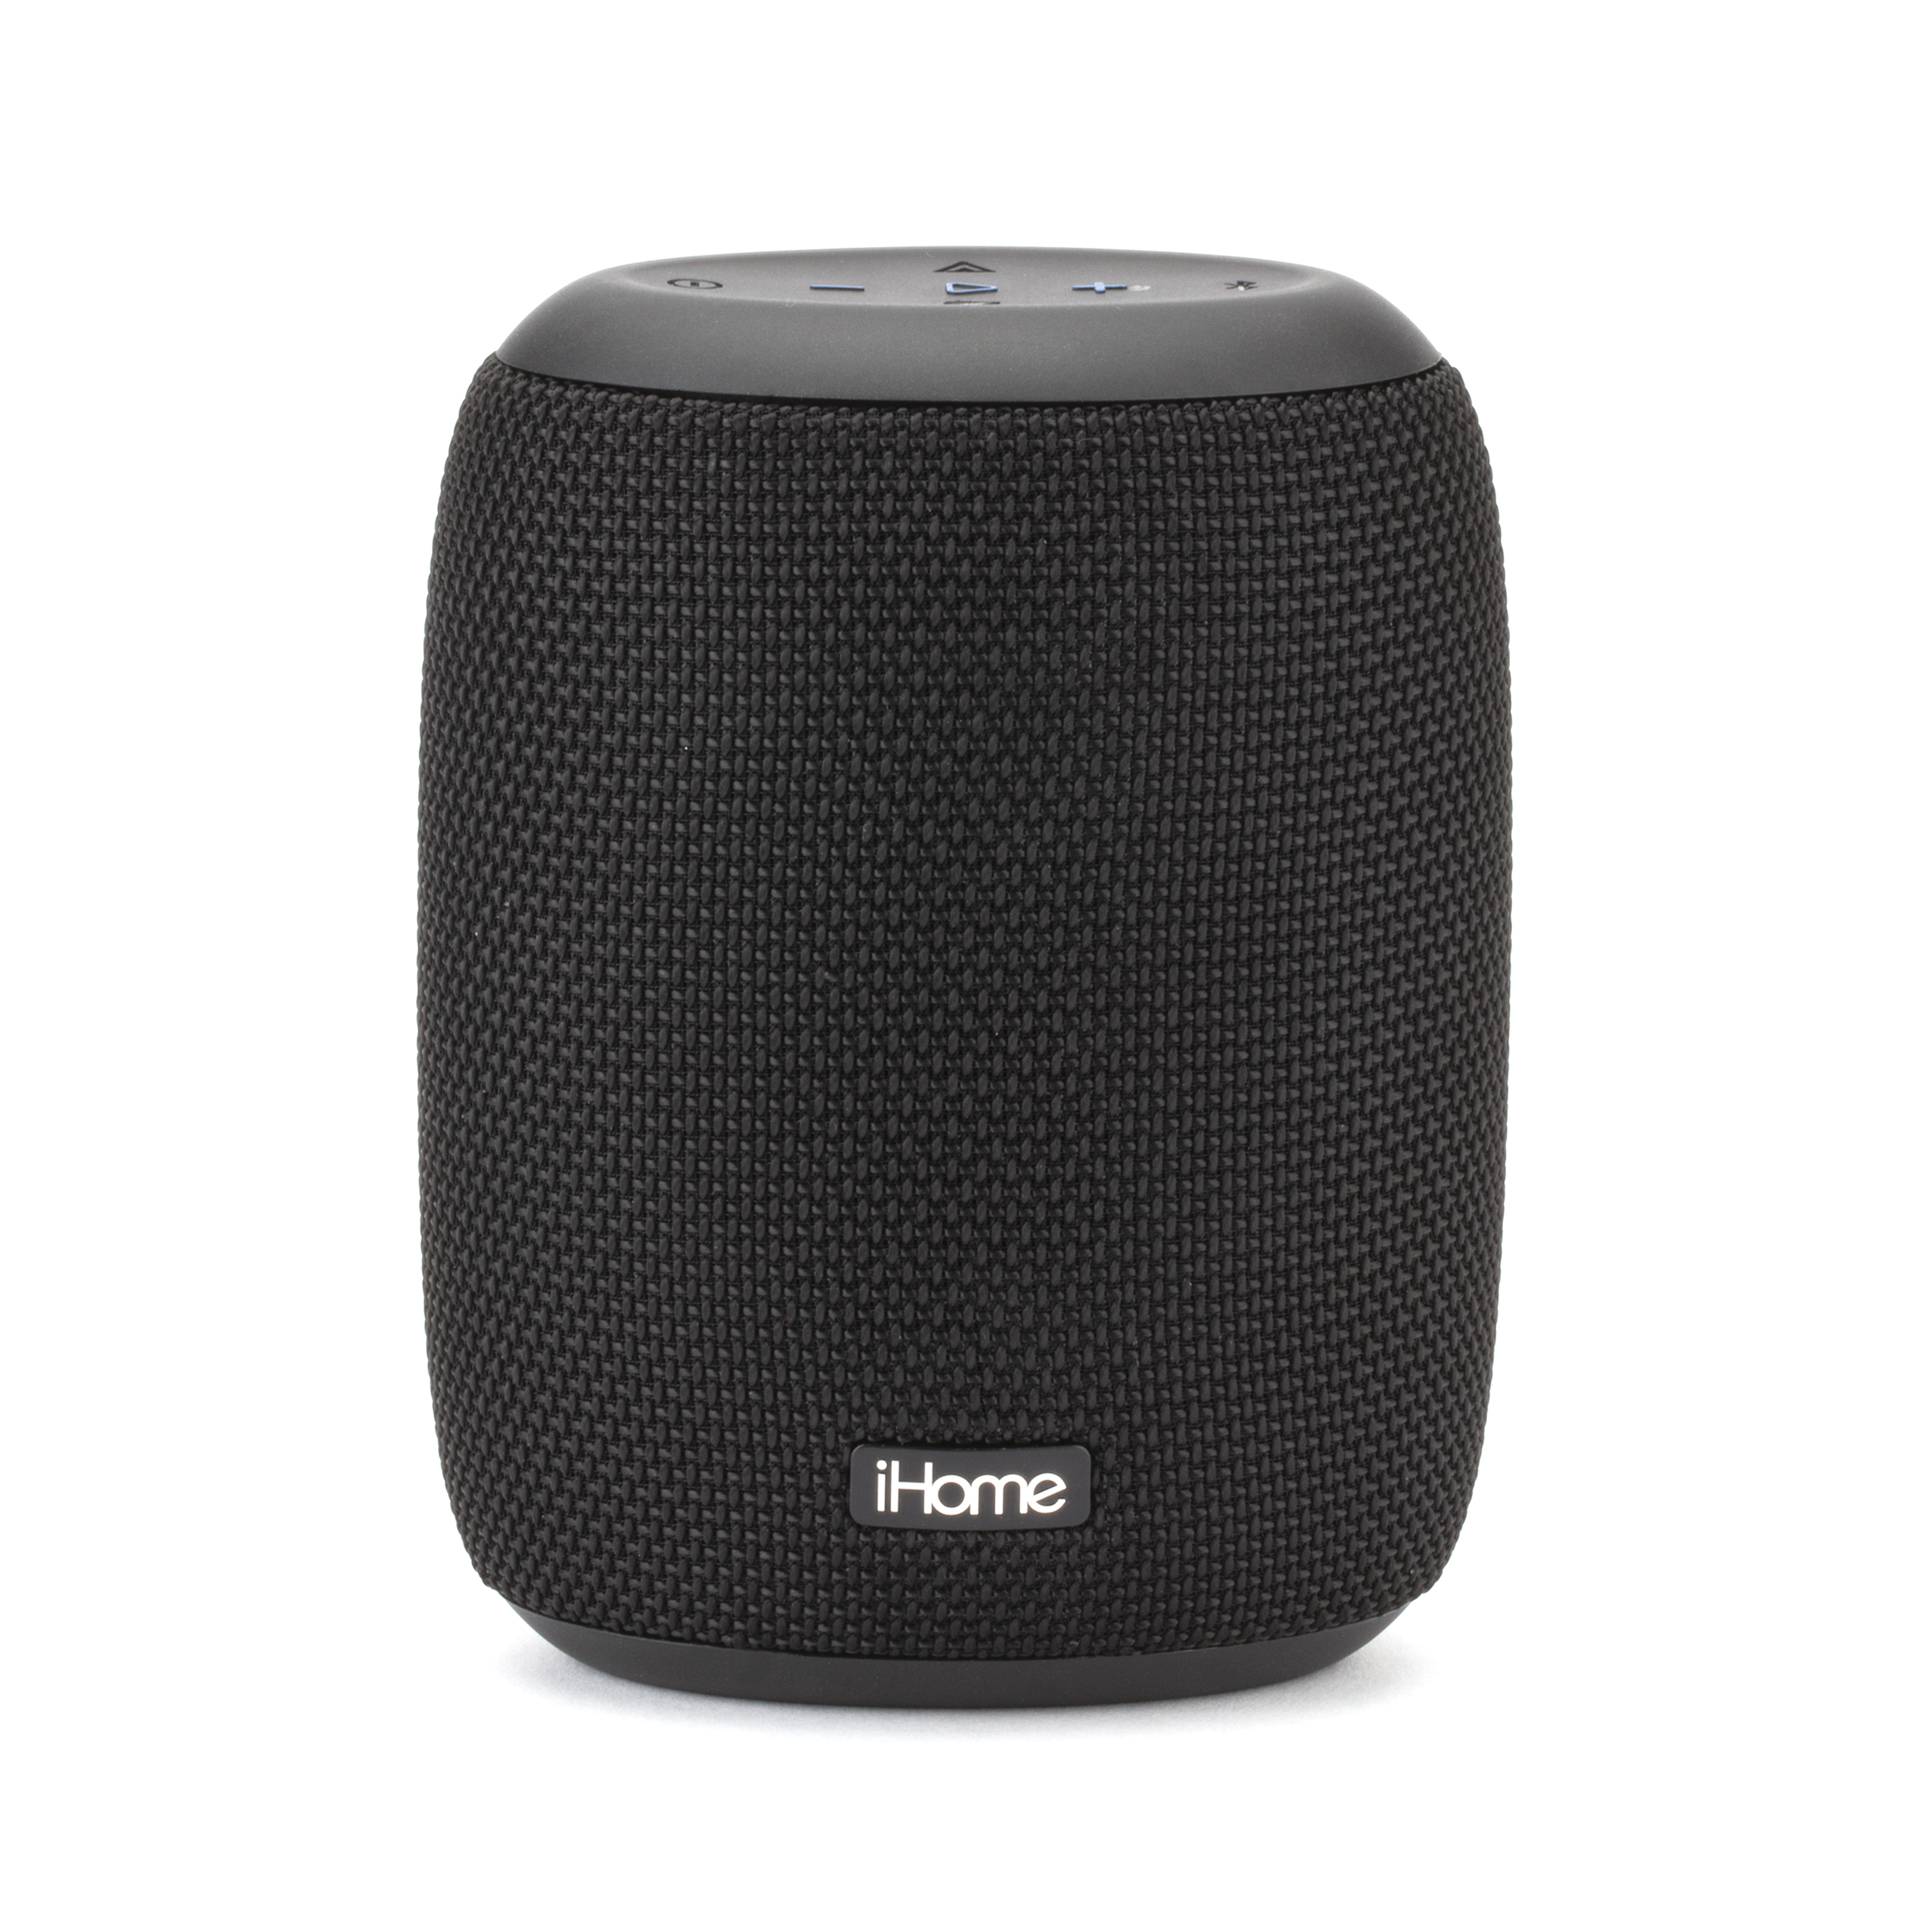 iHome PLAYPRO Portable Bluetooth Speaker, Black, iBT700 - image 4 of 8